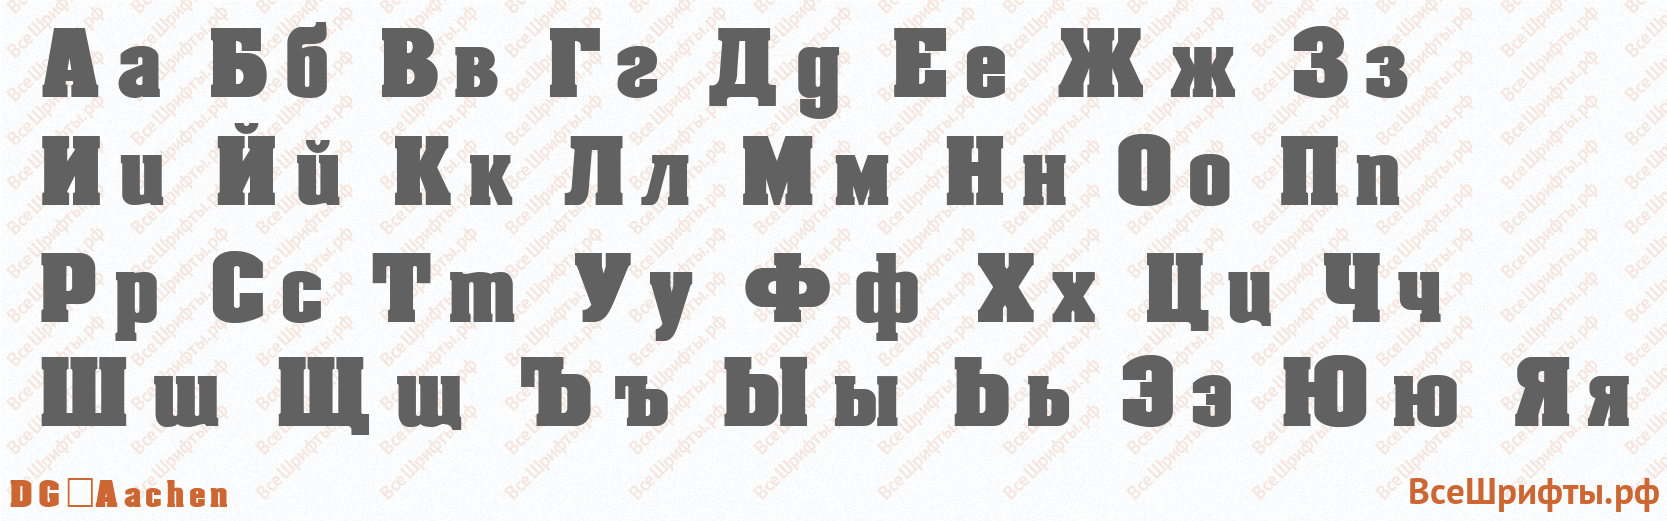 Шрифт DG_Aachen с русскими буквами